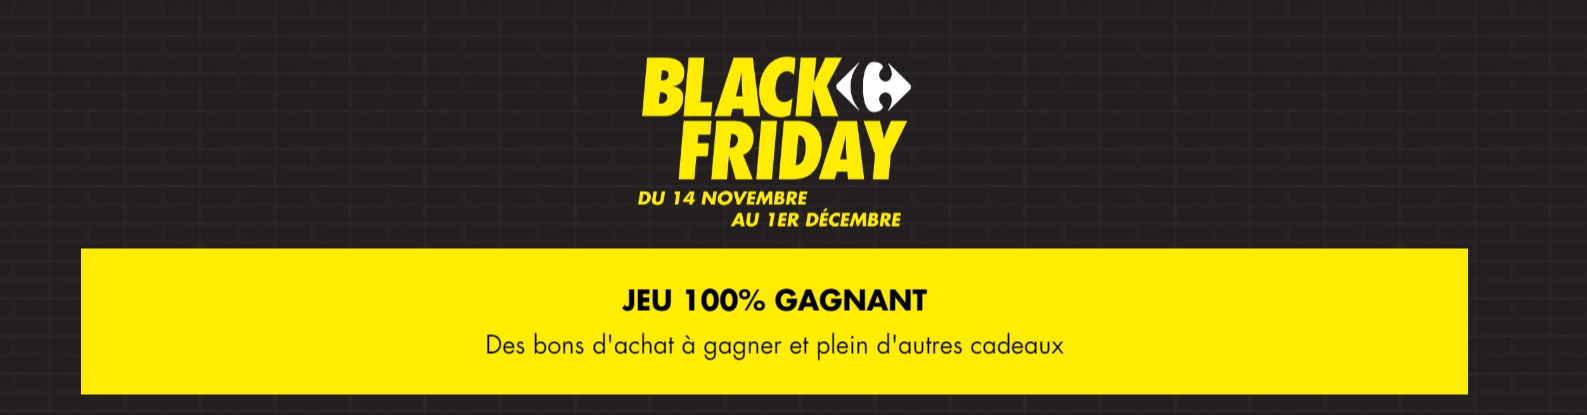 Jeux concours Black Friday - Carrefour fr.jpg